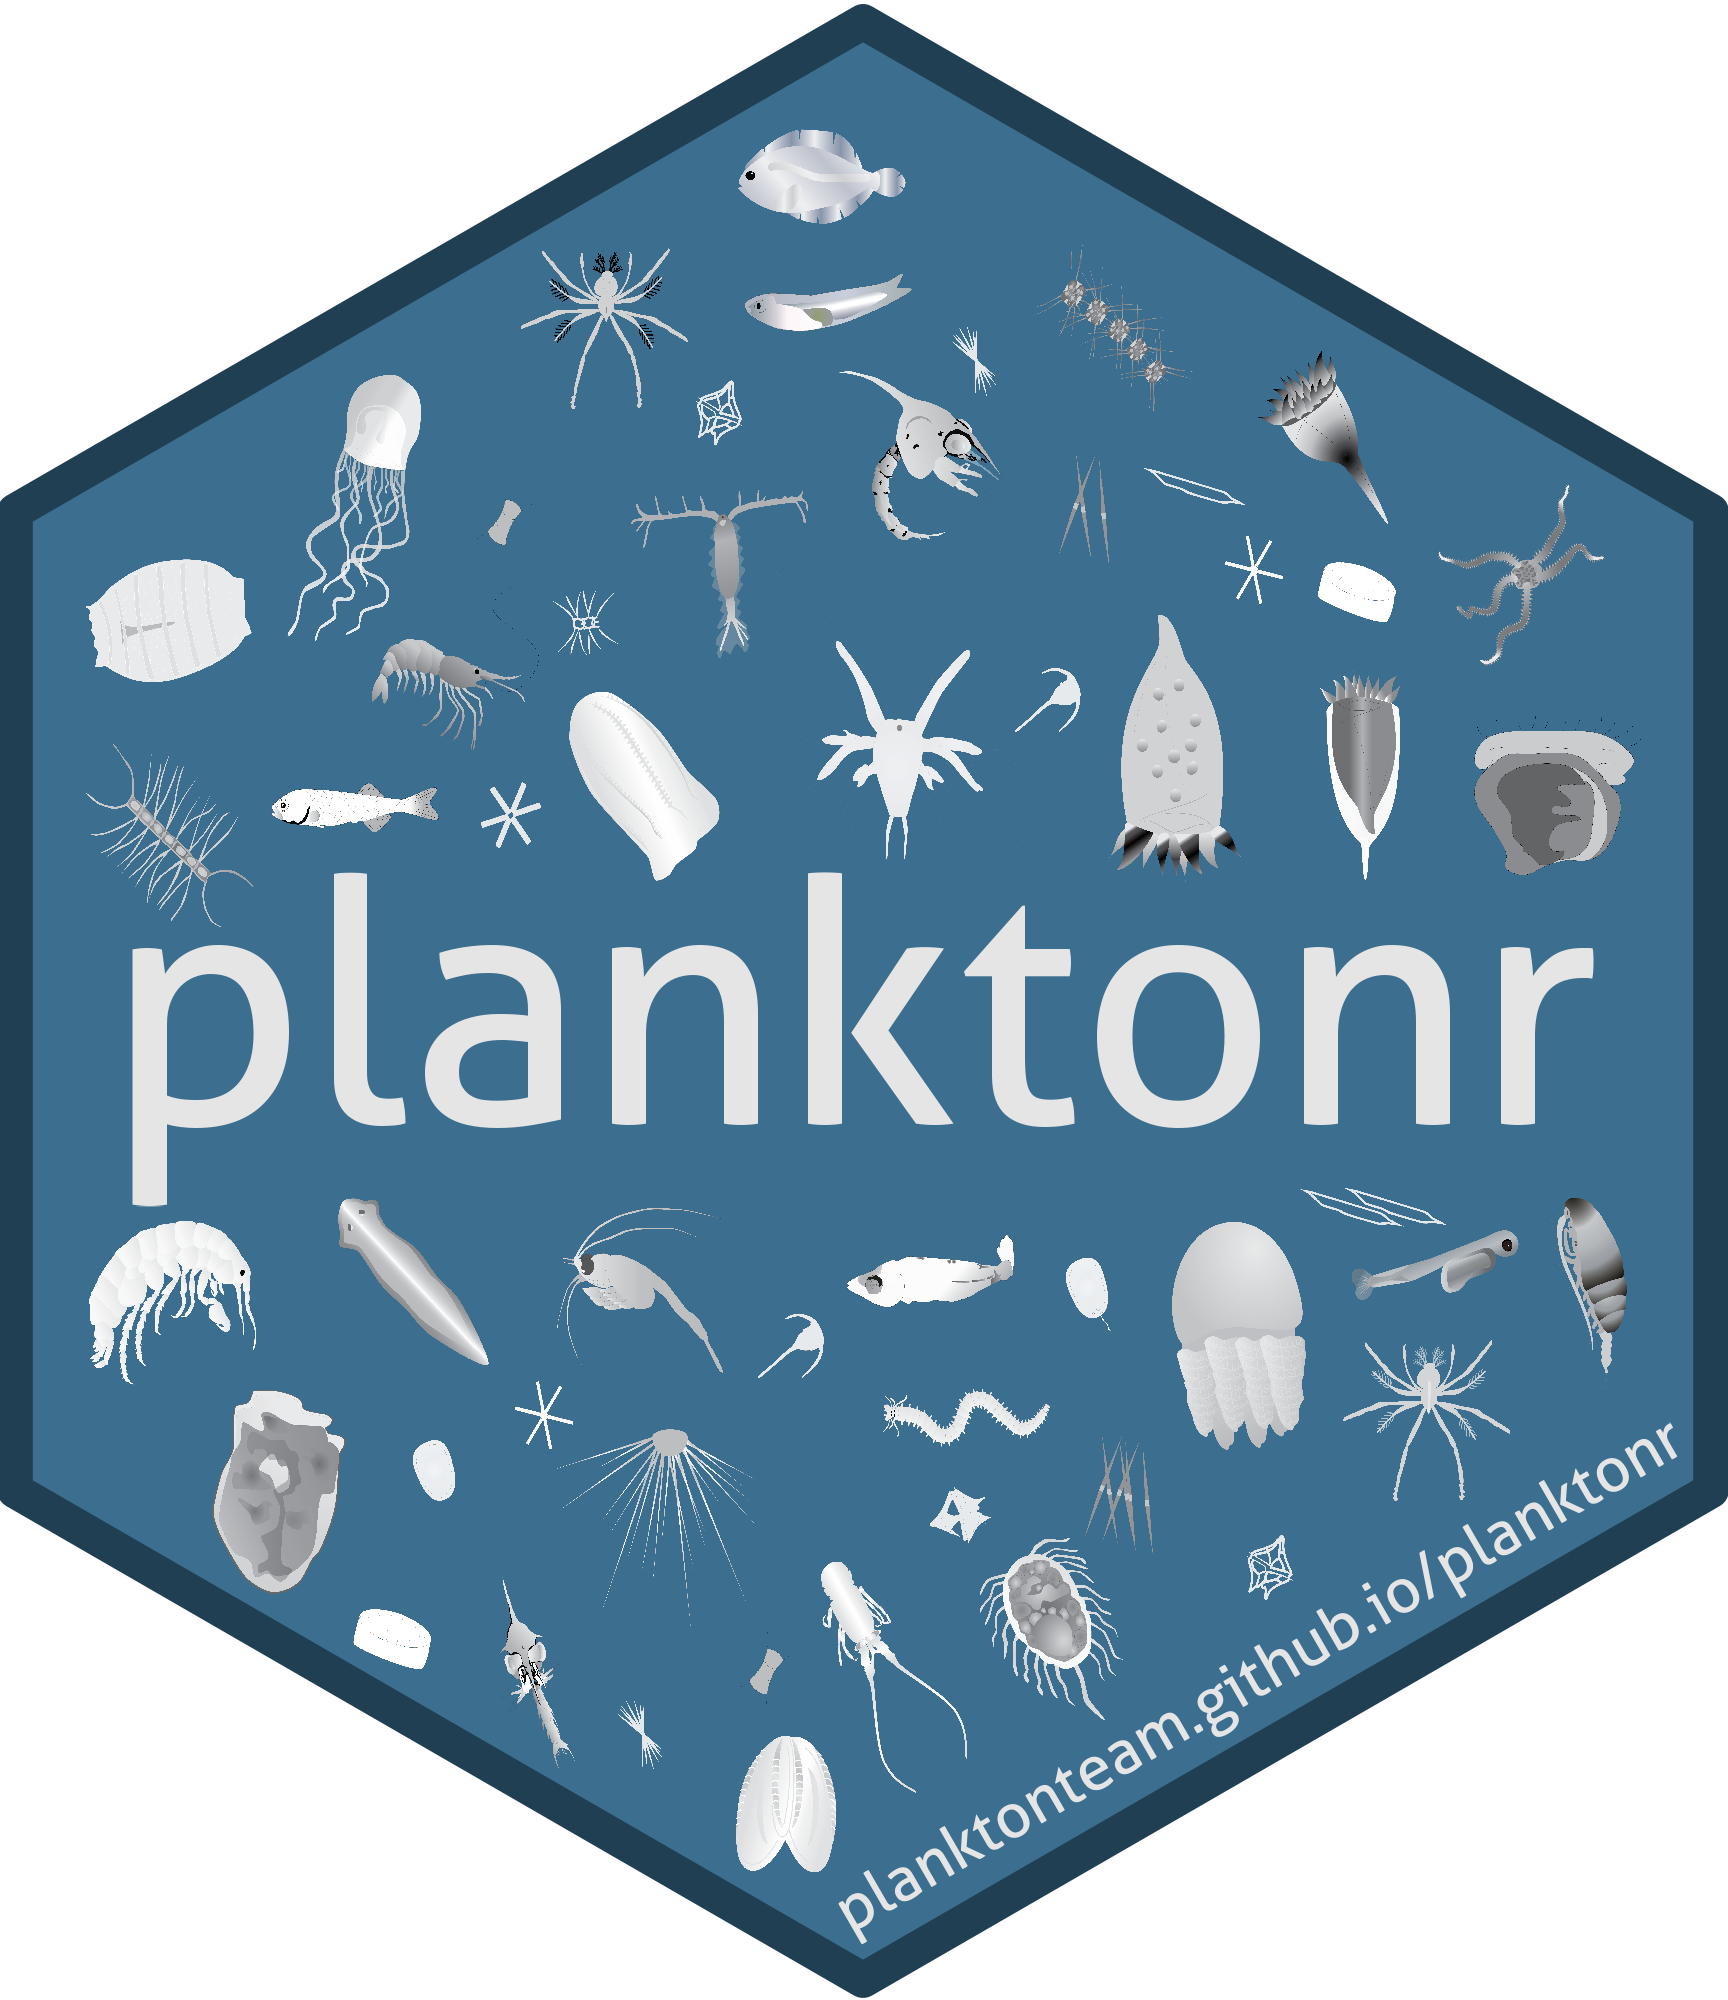 planktonr